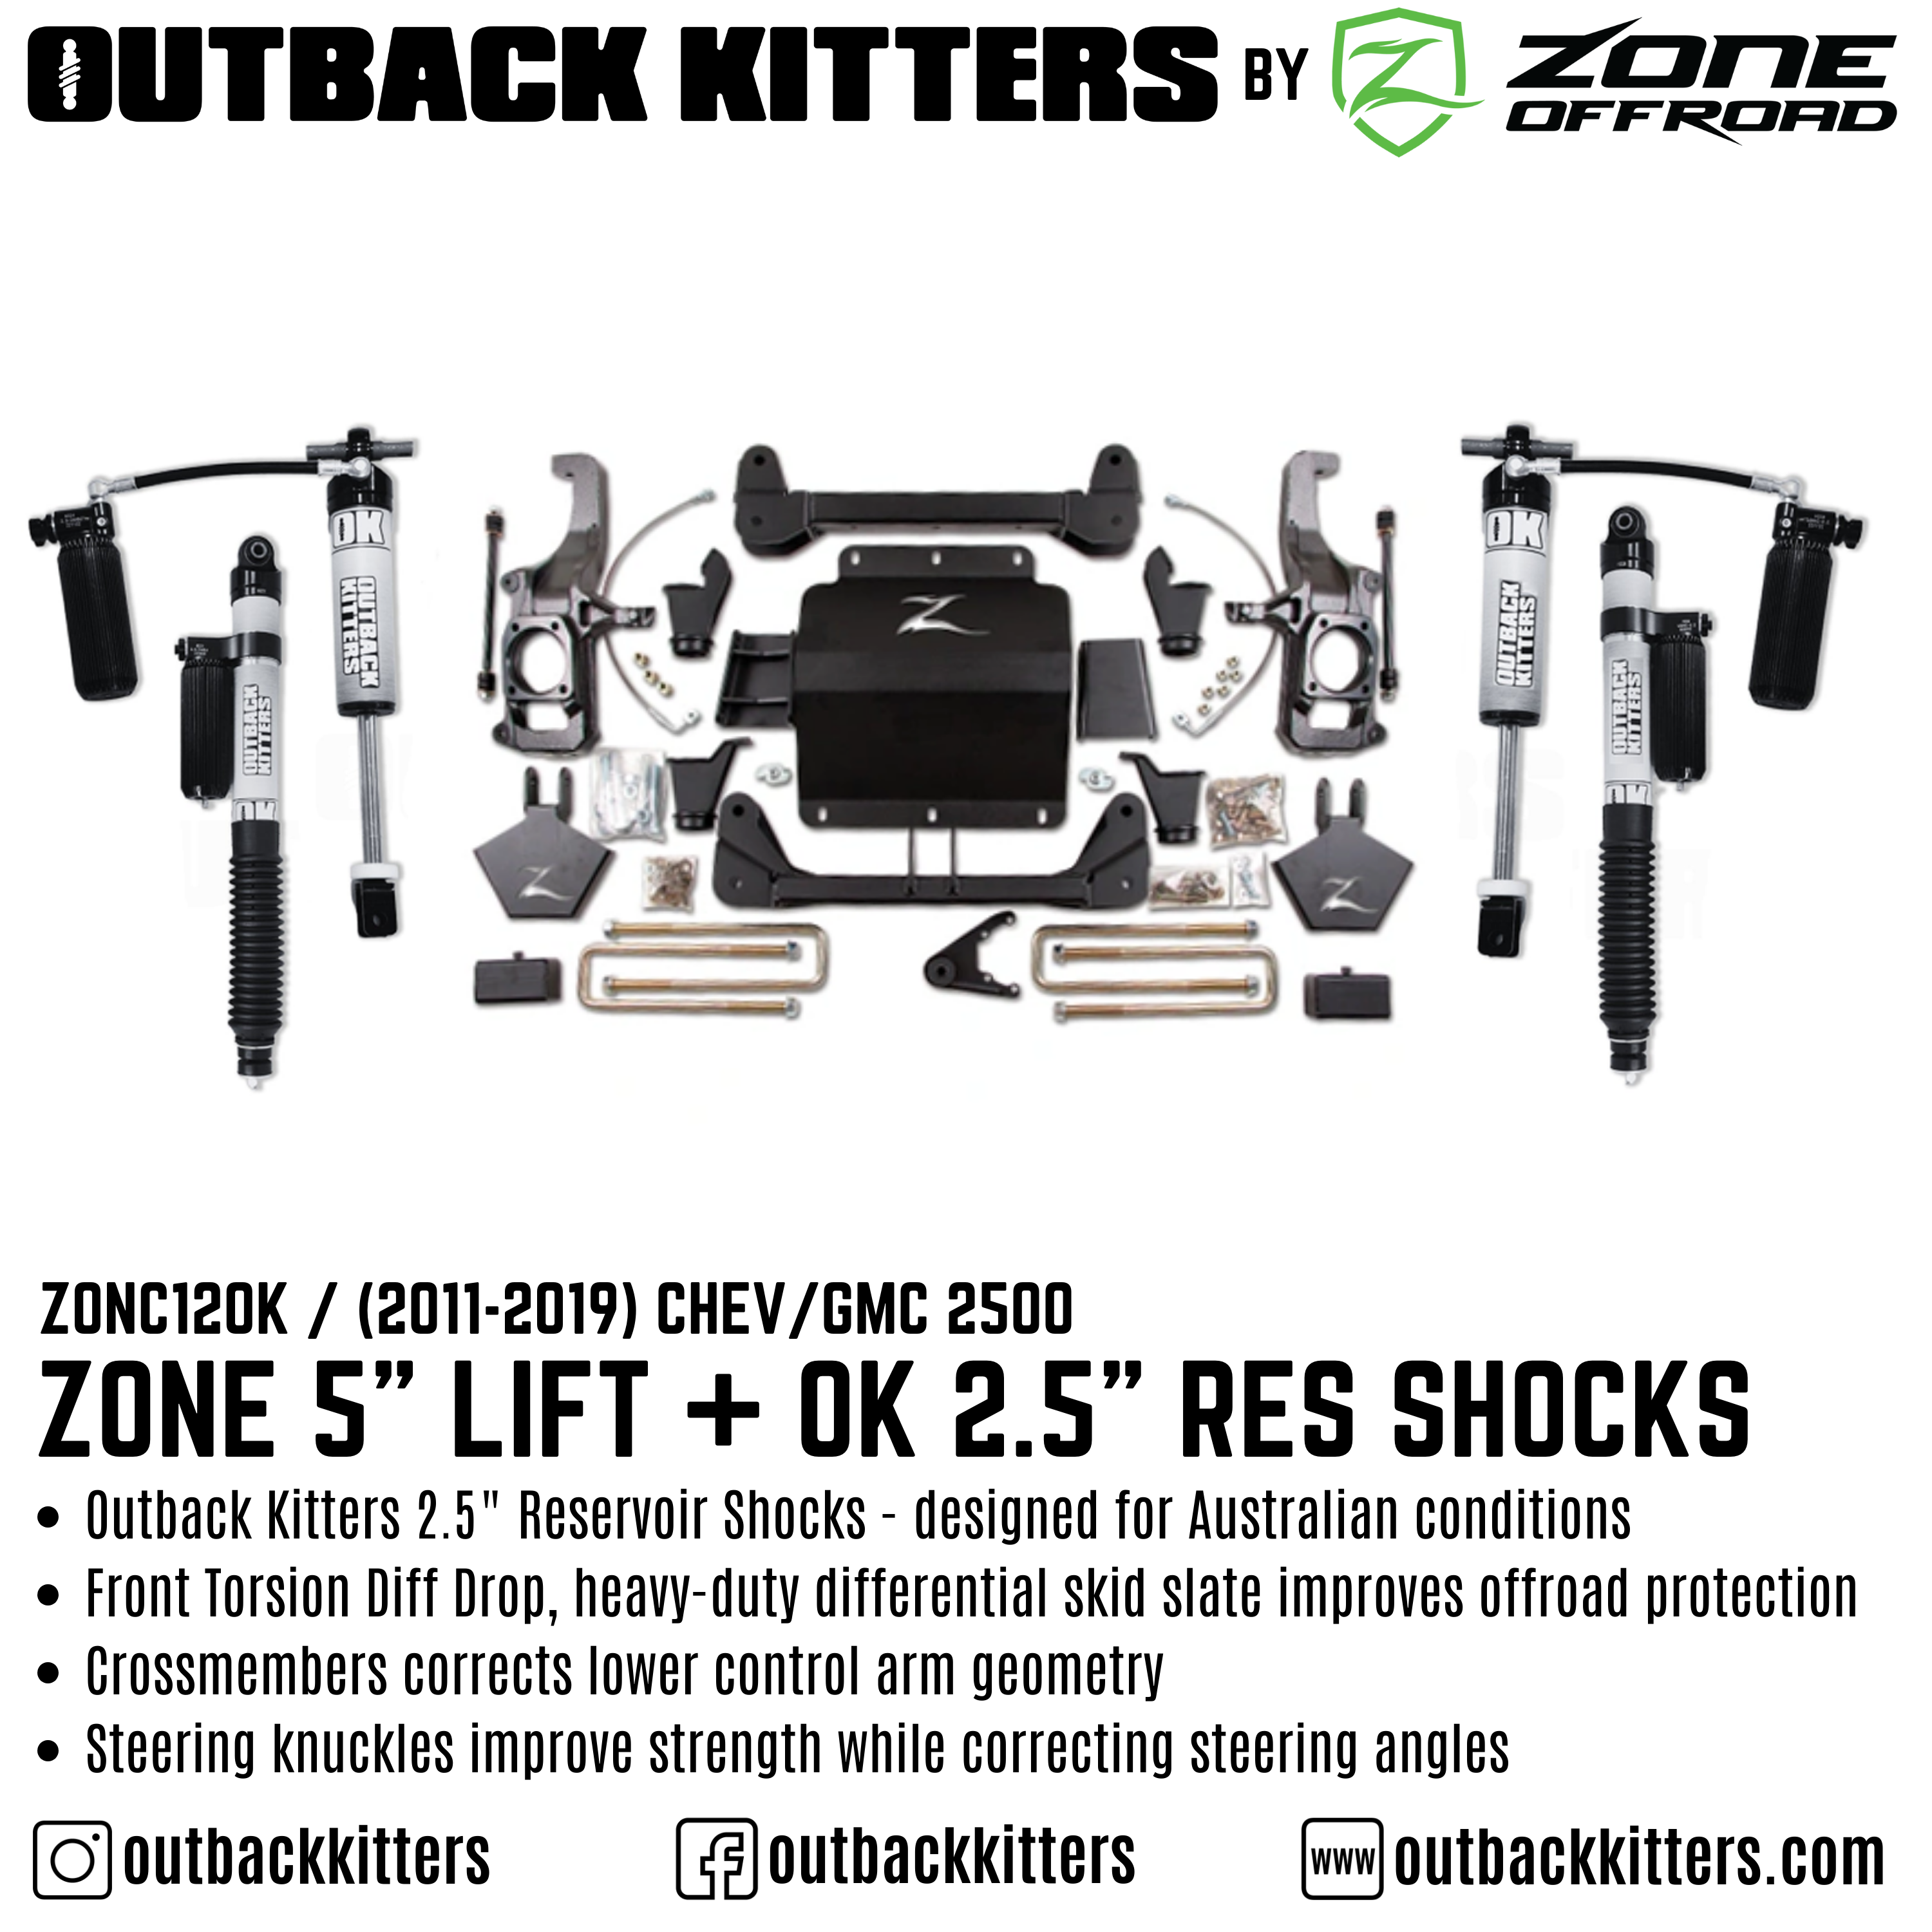 OK by Zone 5" Lift Kit + Outback Kitters 2.5" Reservoir Shocks for 2011-2019 Chev/GMC 2500 - Outback Kitters